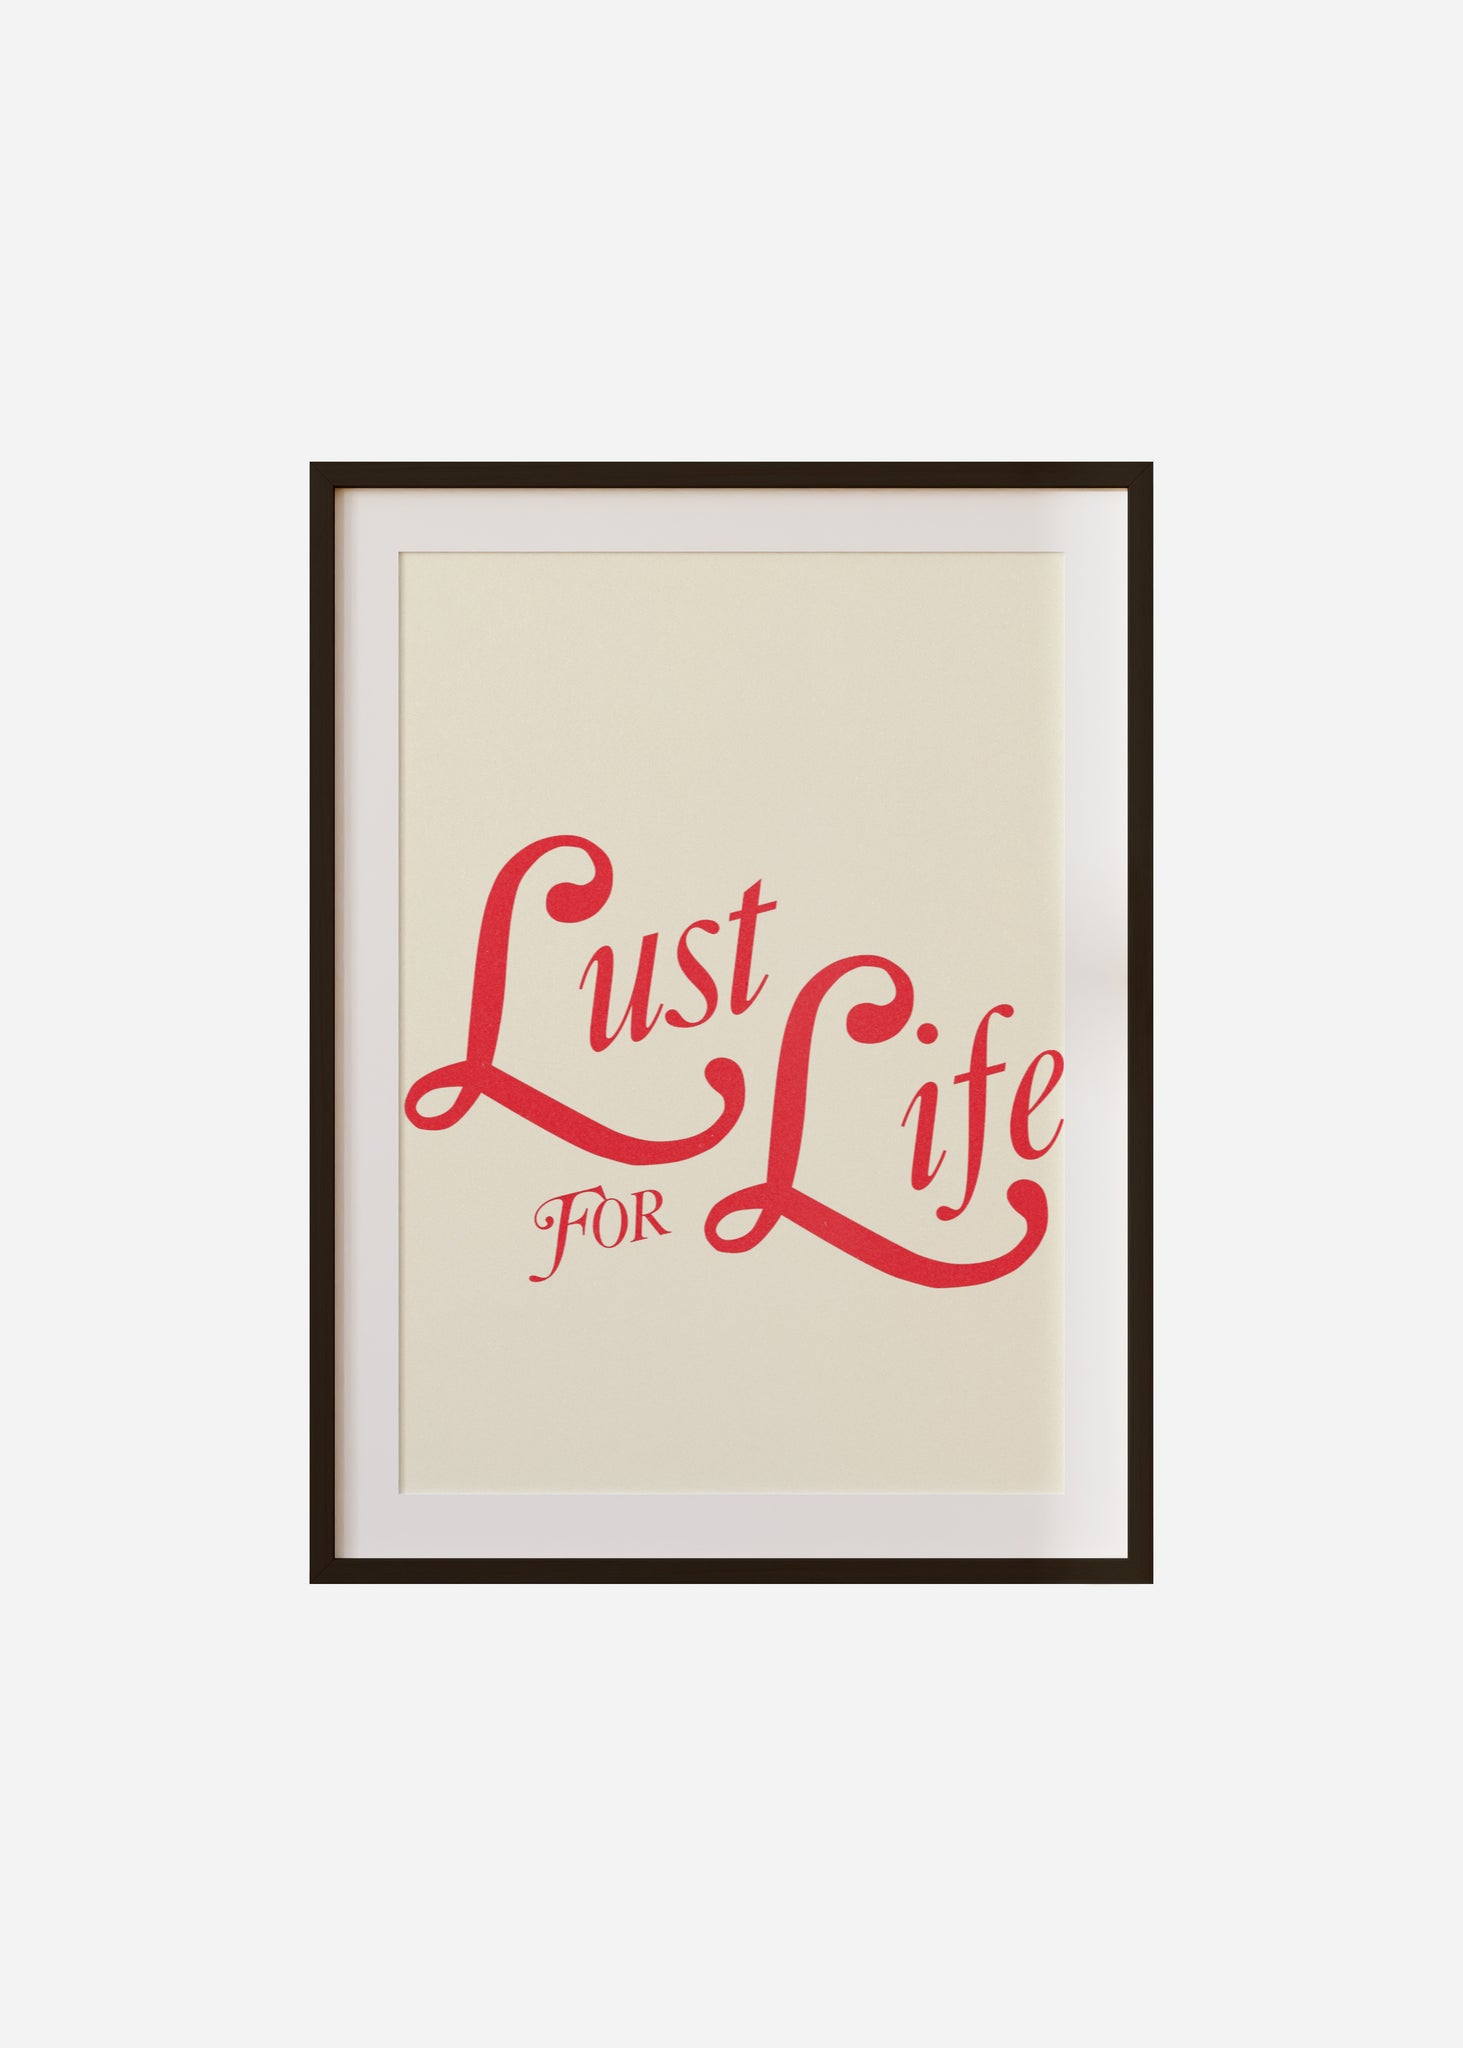 lust for life Framed & Mounted Print